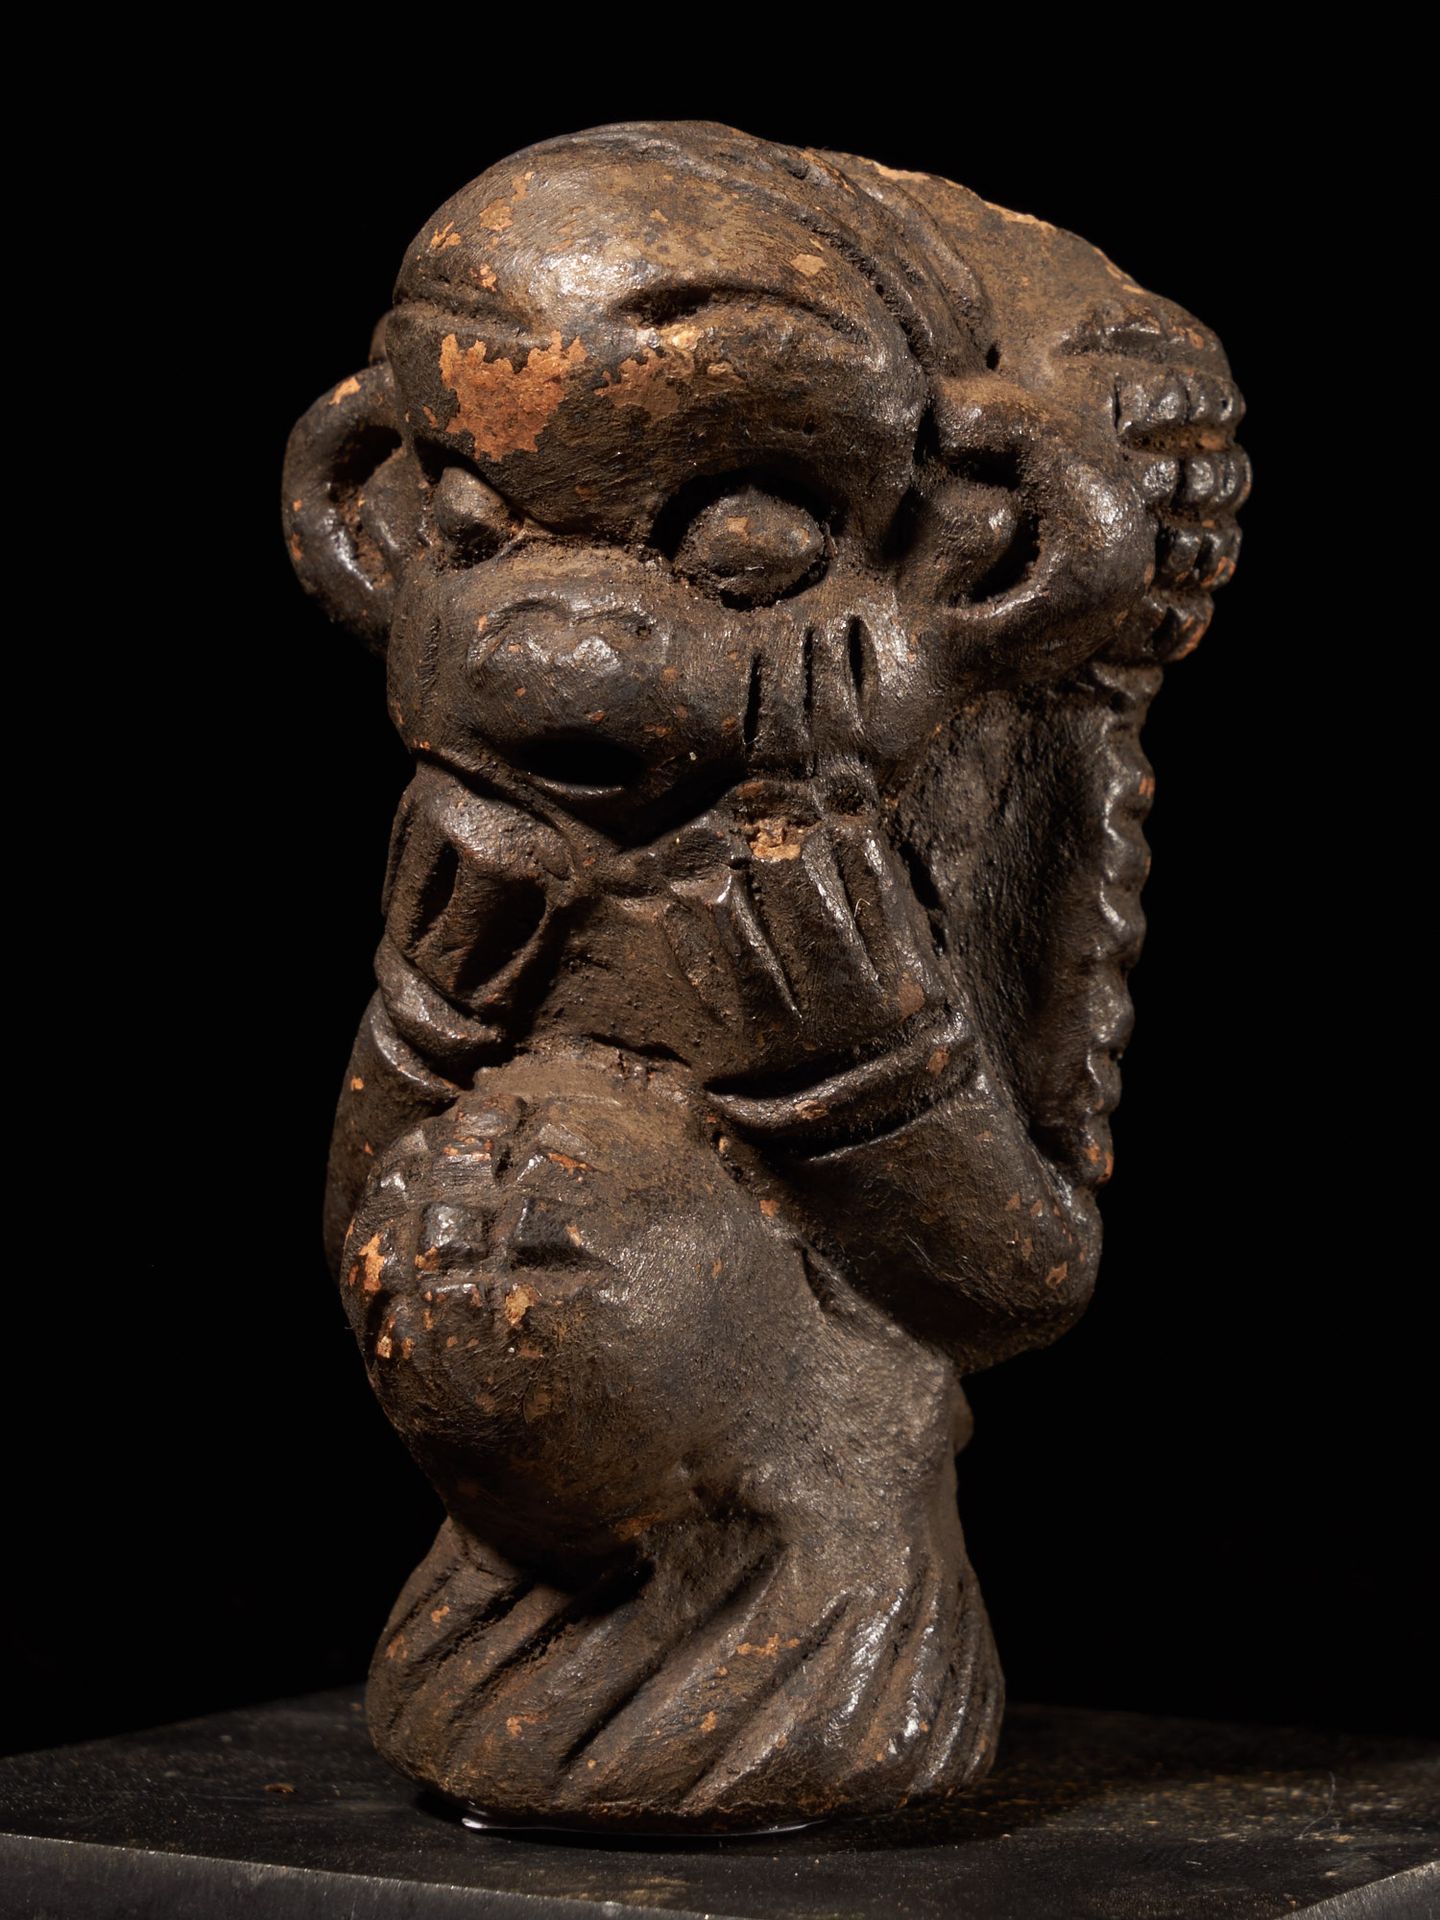 Peuple tikar Pipe à tabac en céramique du peuple Tikar, Cameroun - 8,5*5*7,5 cm